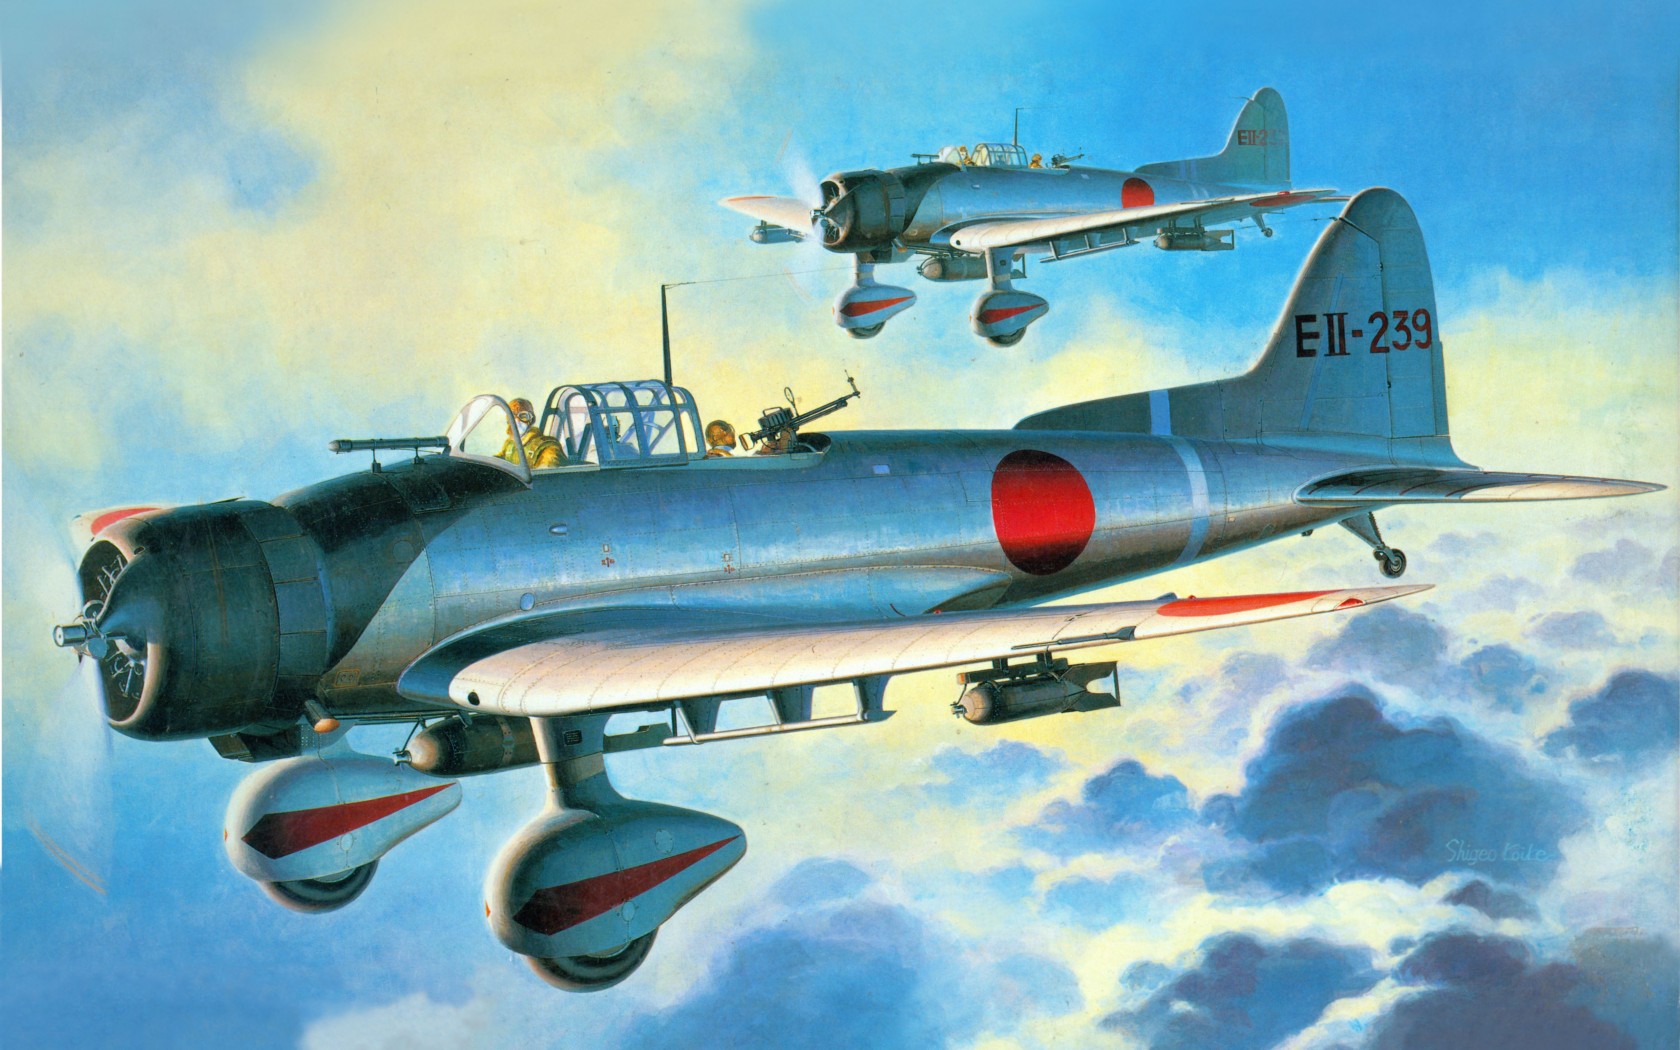 General 1680x1050 World War II airplane aircraft military aircraft military Japan Imperial Japanese Navy Pearl Harbor Dive bomber Aichi D3A Japanese aircraft